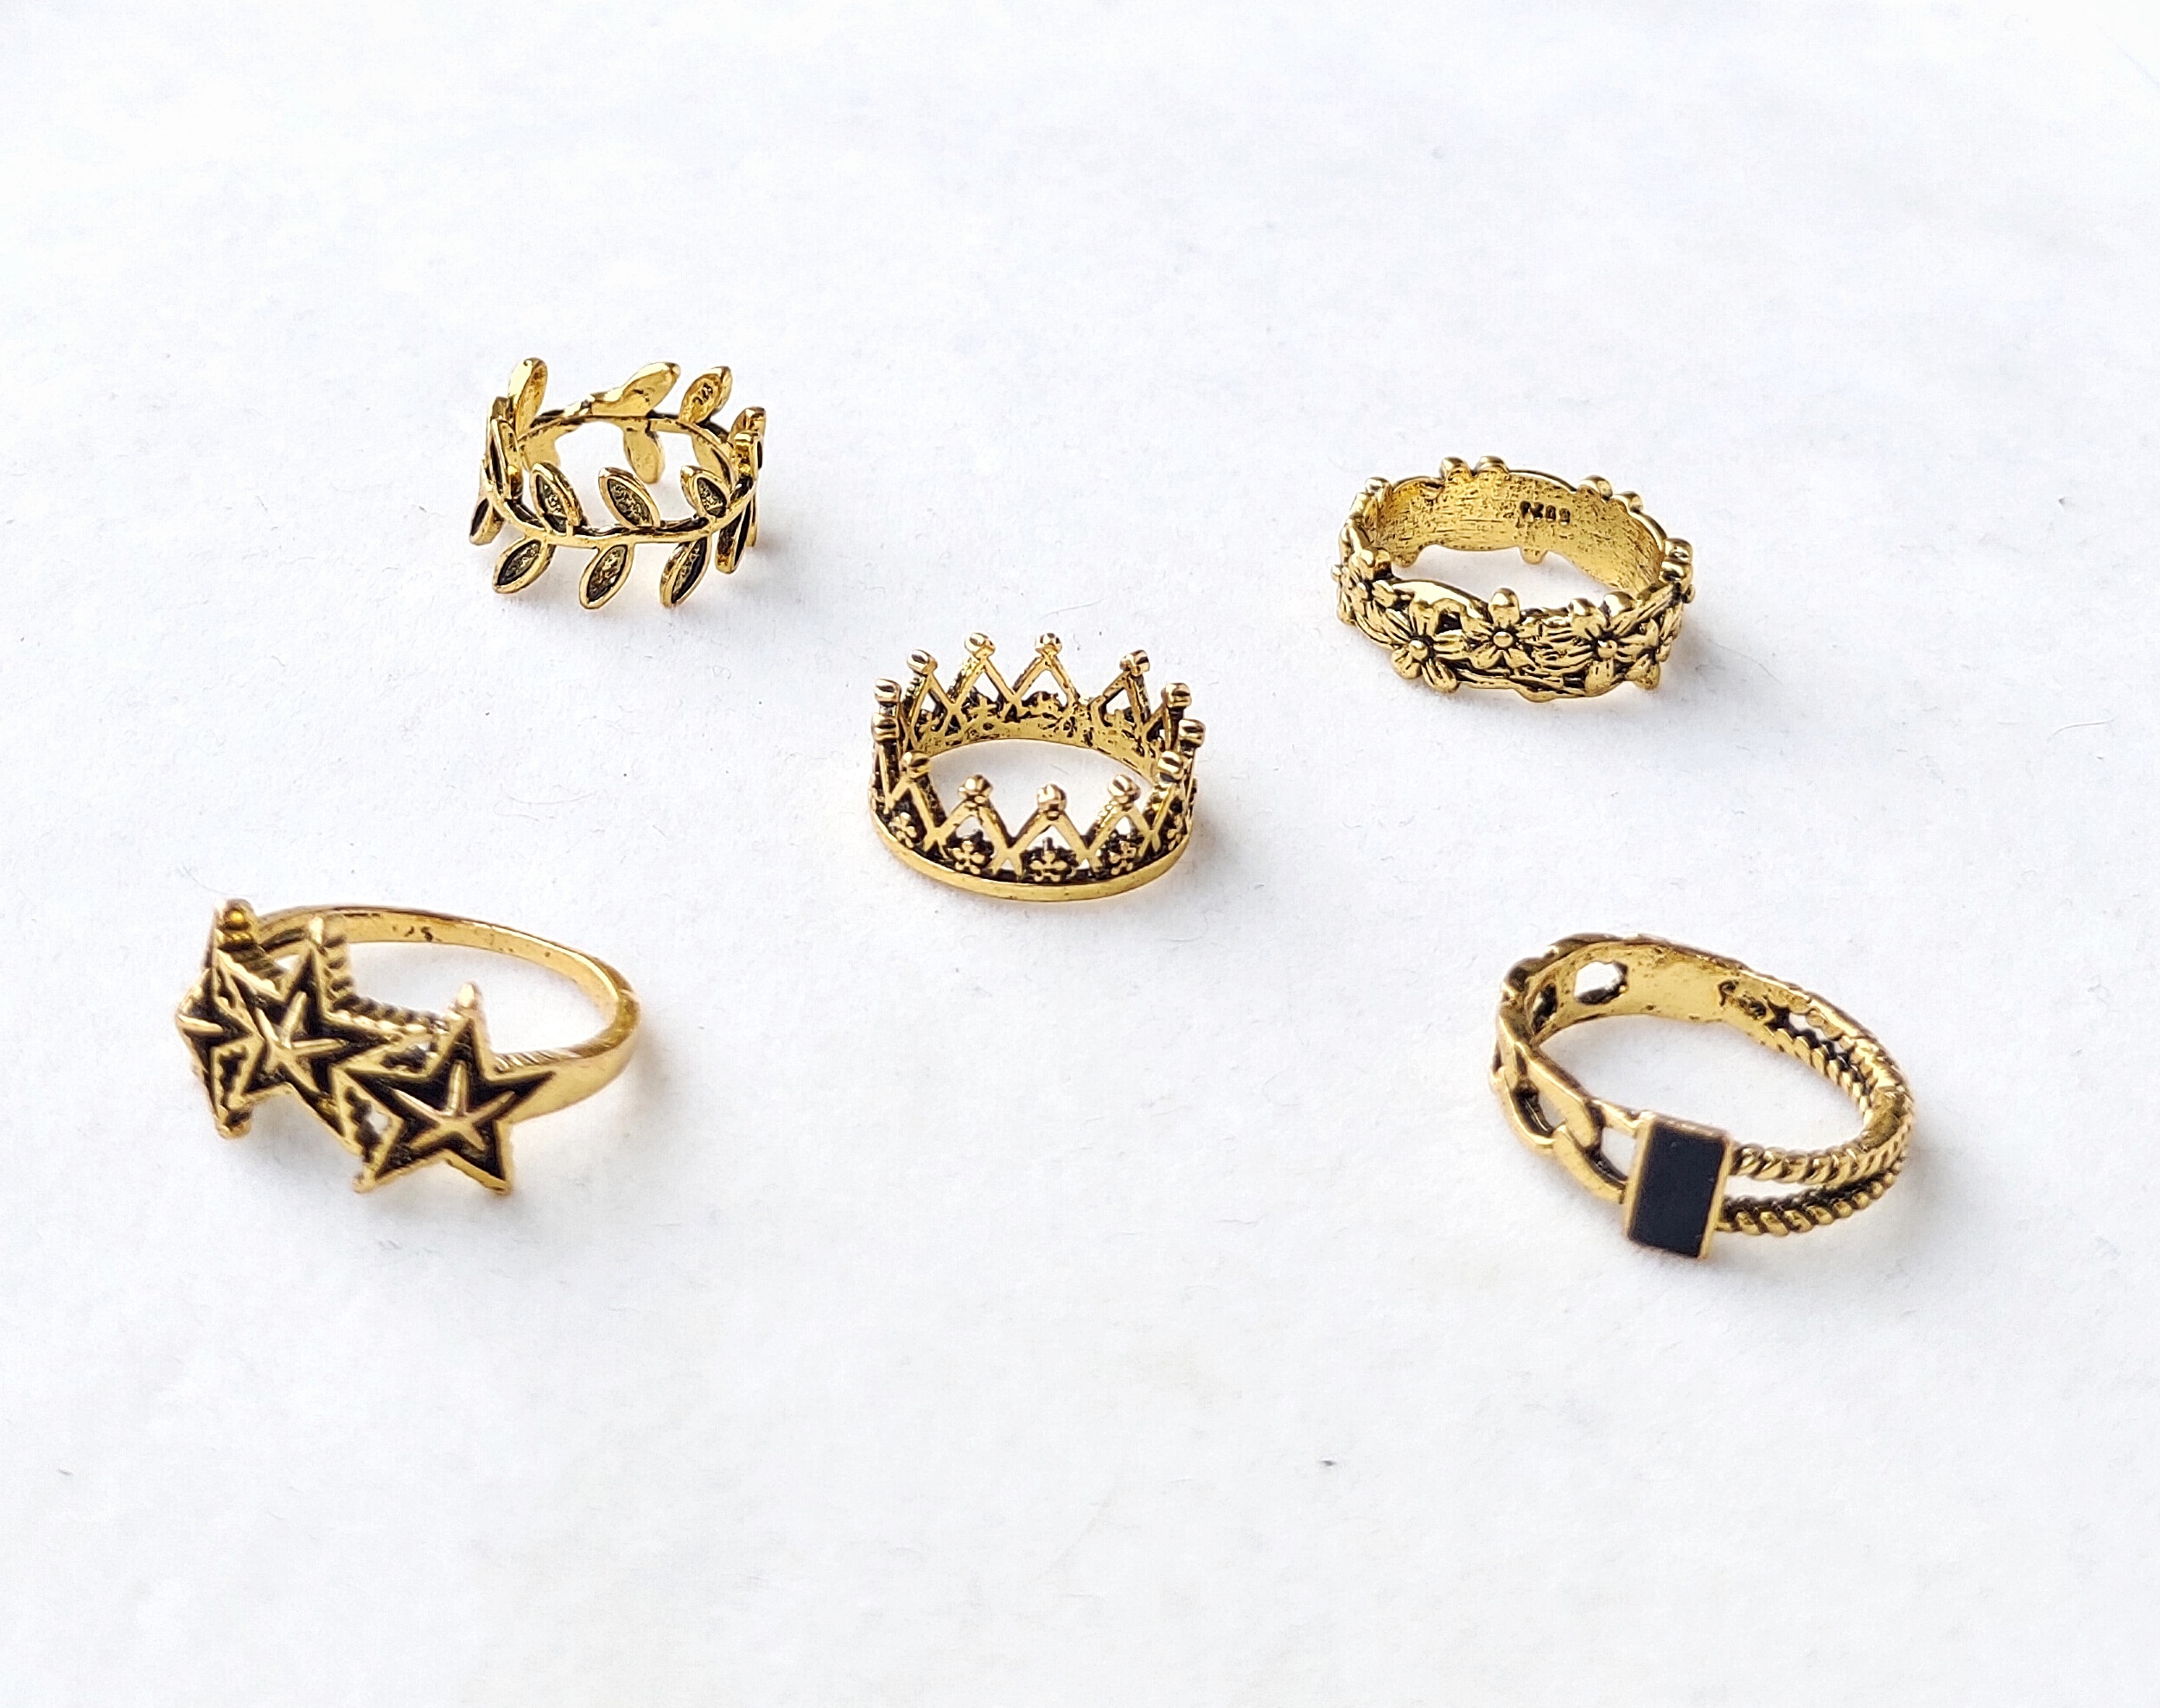 Joyalukkas 18k (750) Yellow Gold and Diamond Ring for Girls : Amazon.in:  Fashion